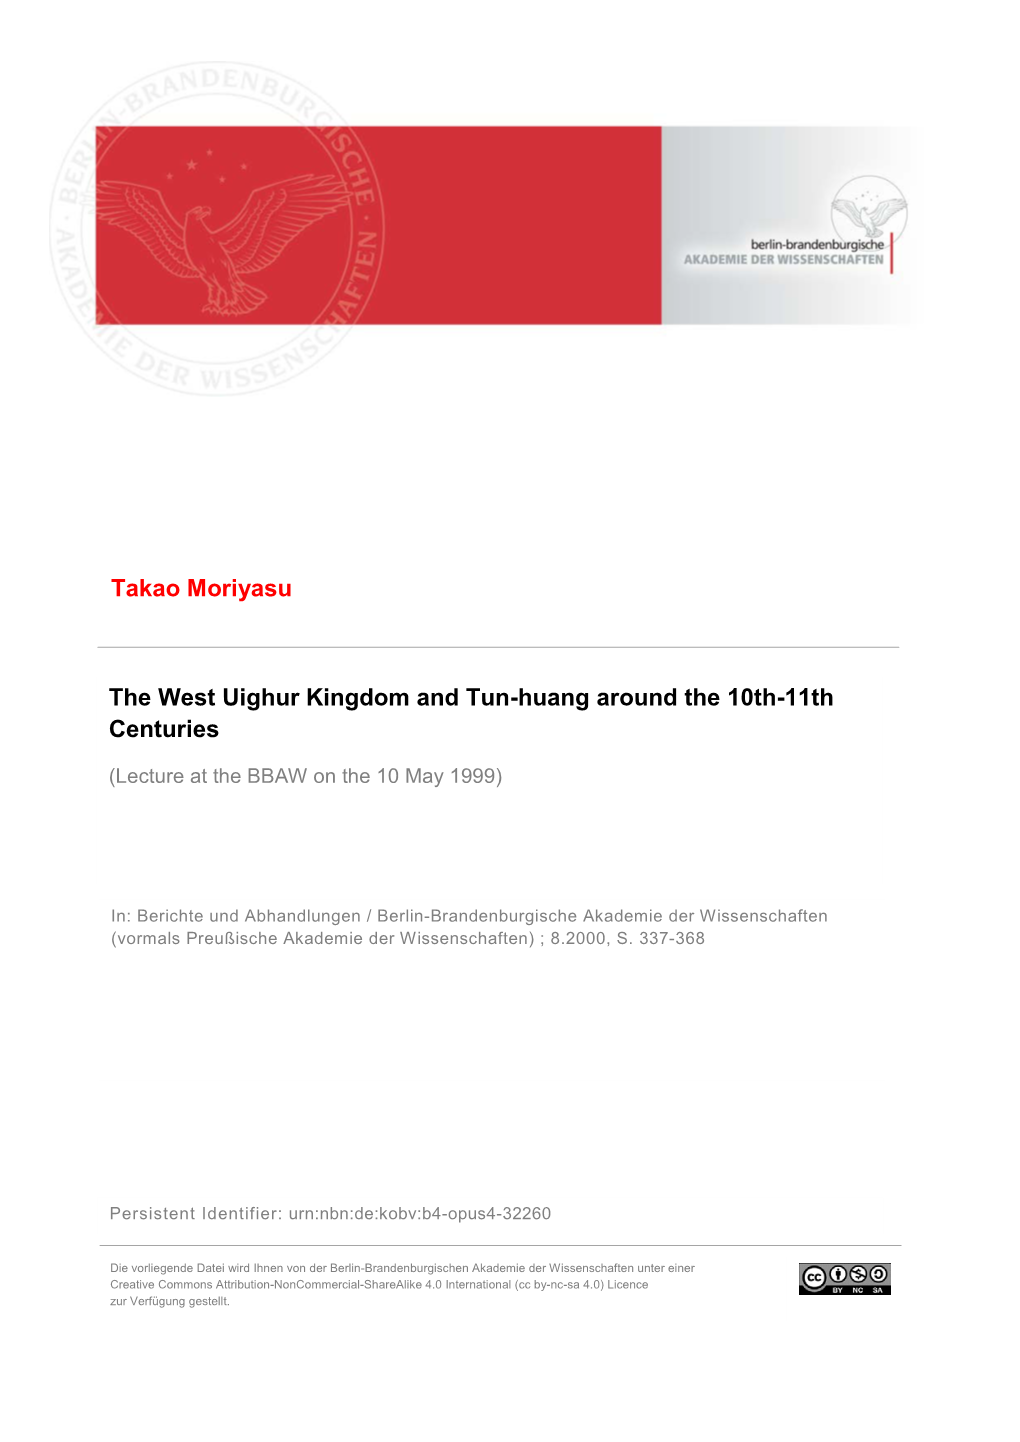 Takao Moriyasu the West Uighur Kingdom and Tun-Huang